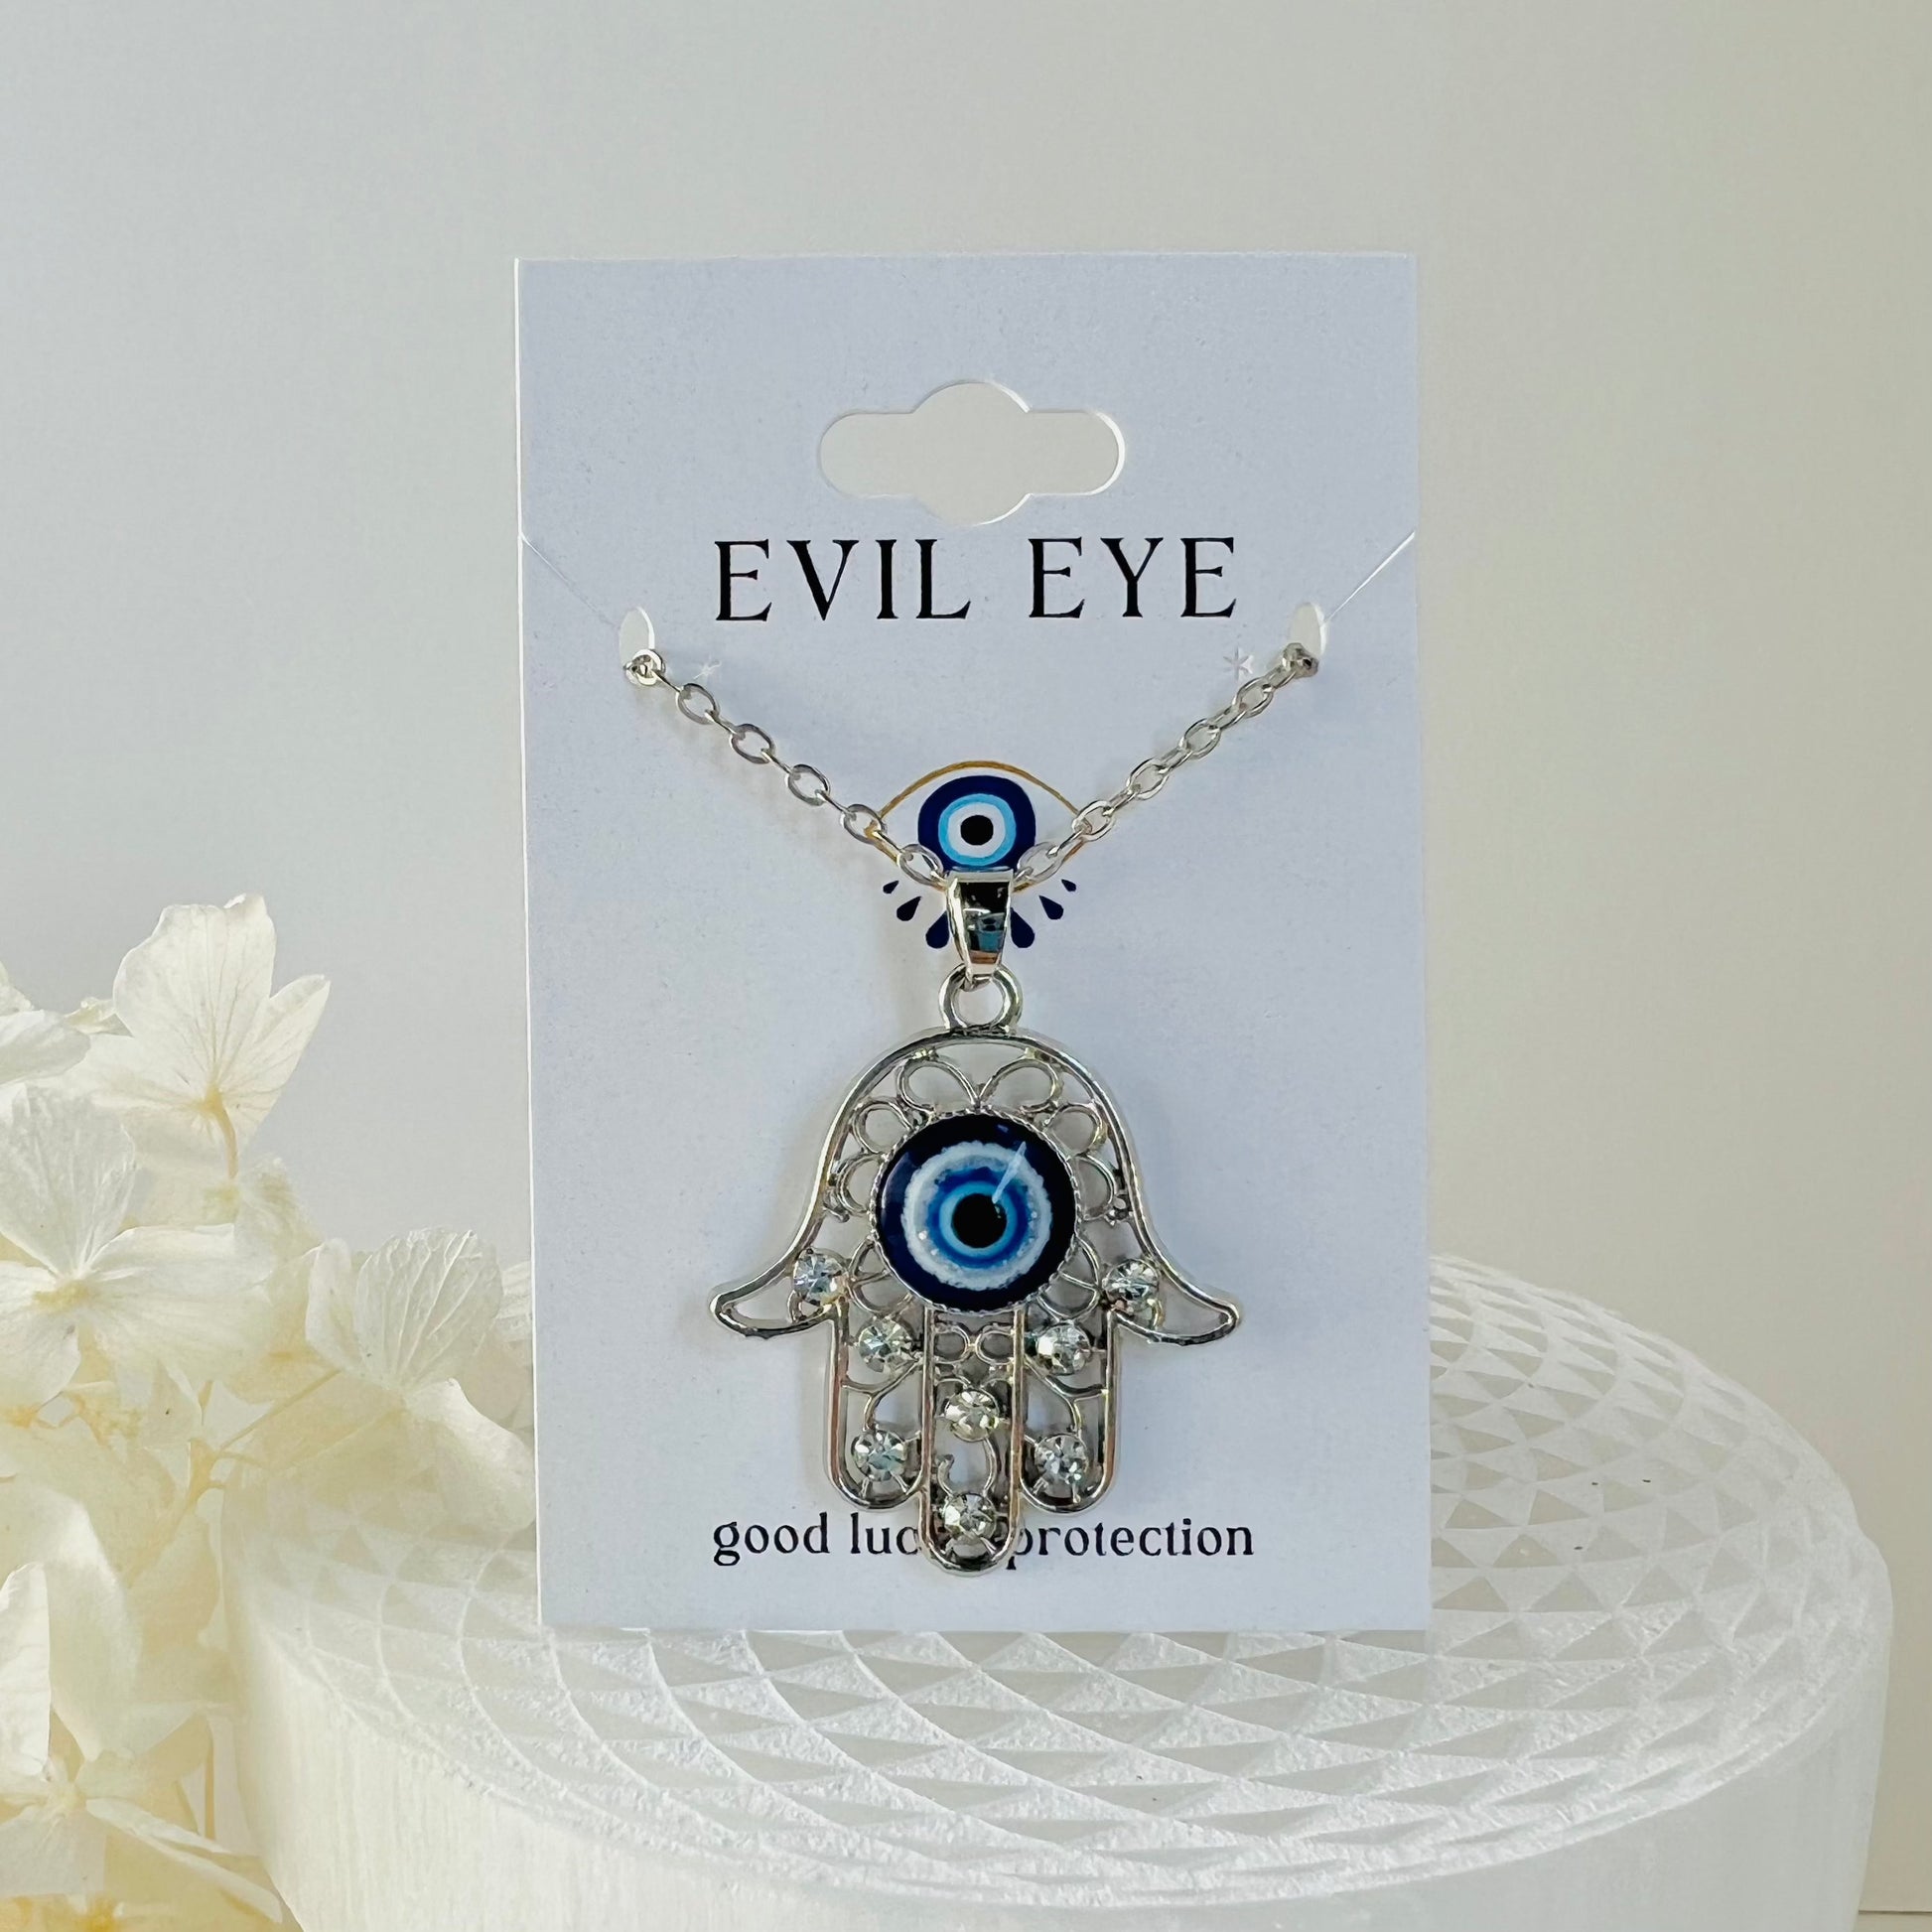 N6&7-Evil Eye & Rhinestone Pendant Necklace- Jewelry  from Shein